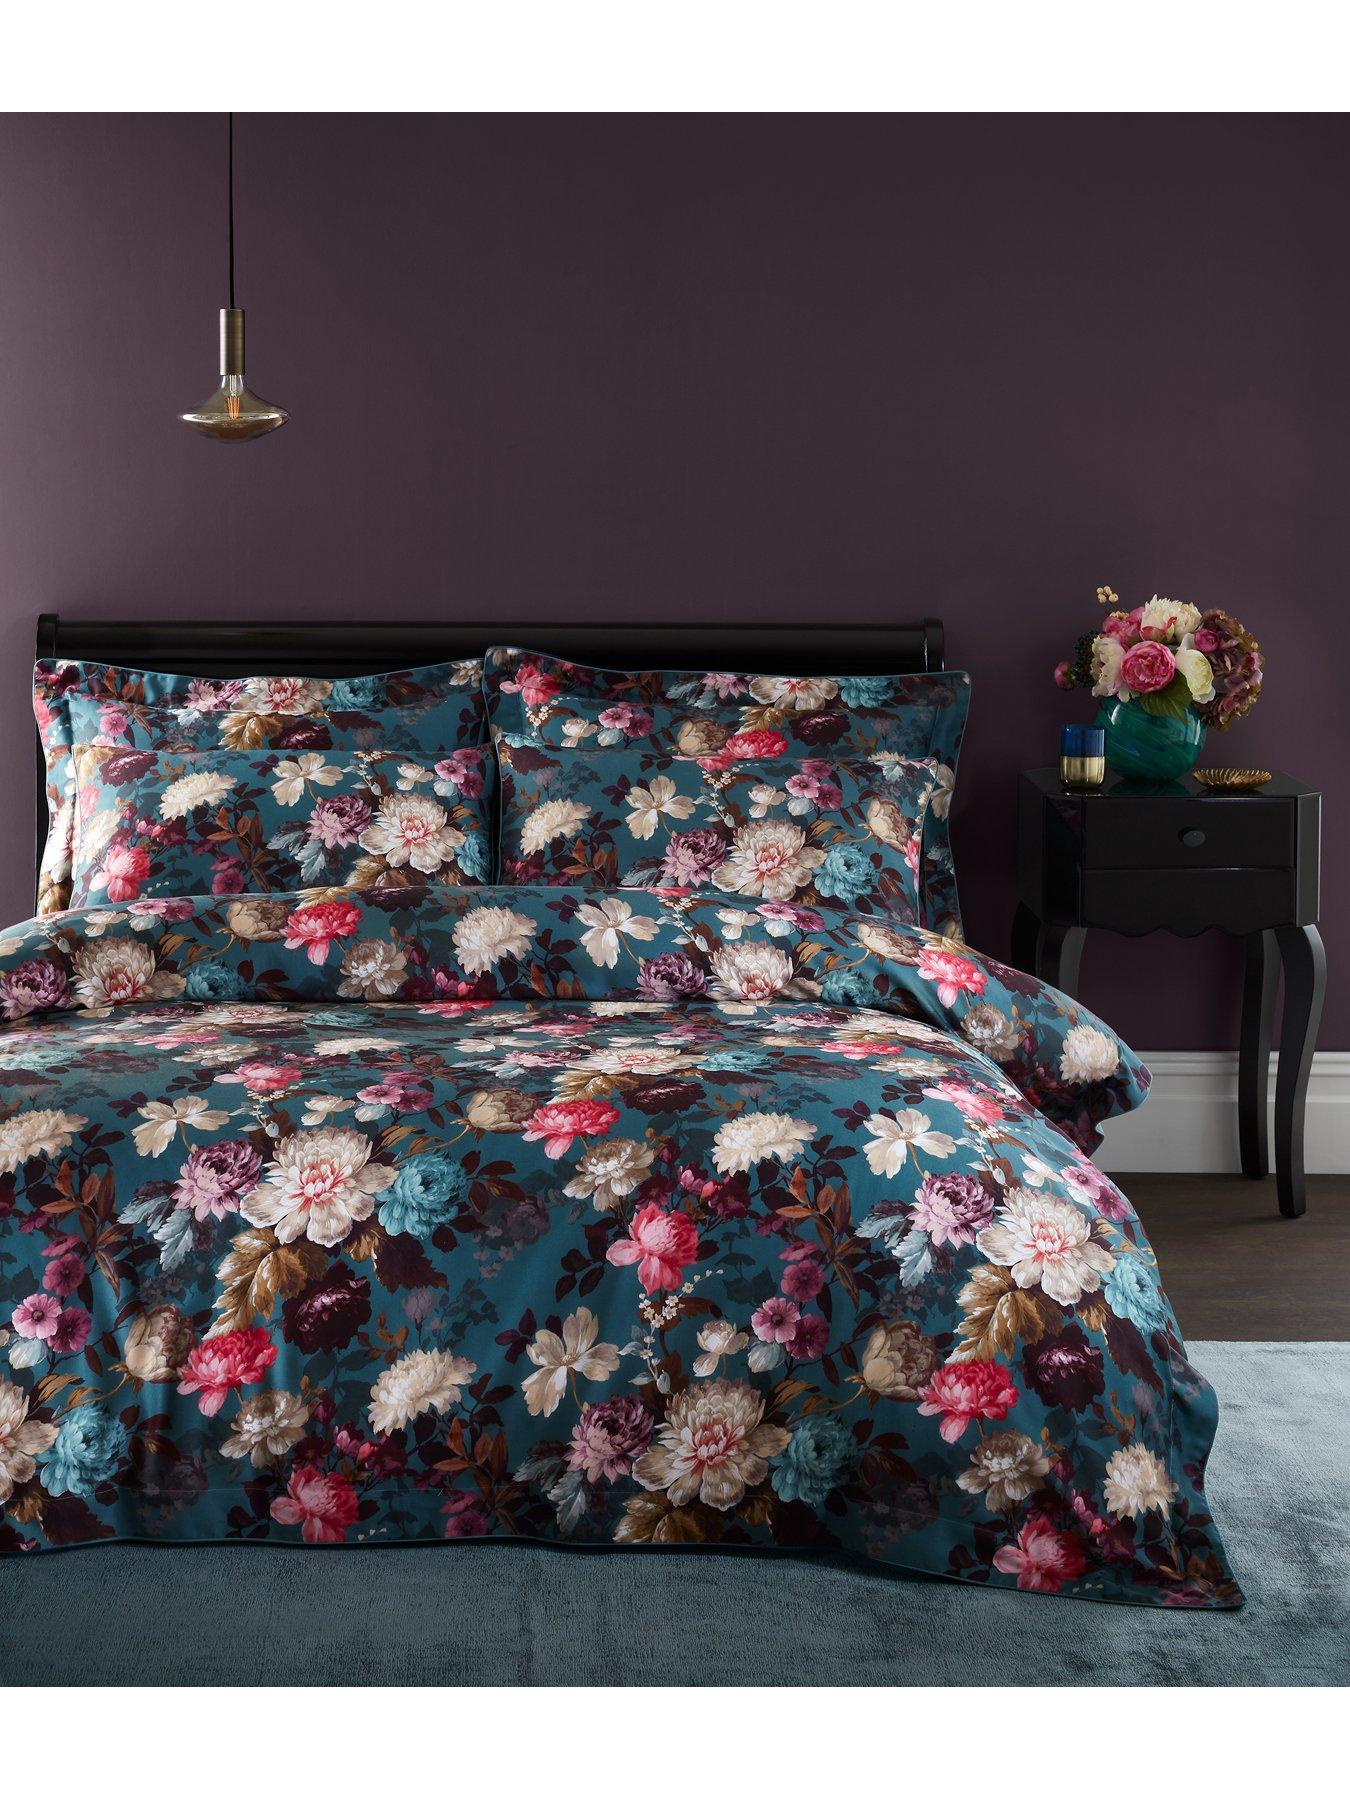 Cotton King 5ft Dorma Bedroom Duvet Covers Bedding